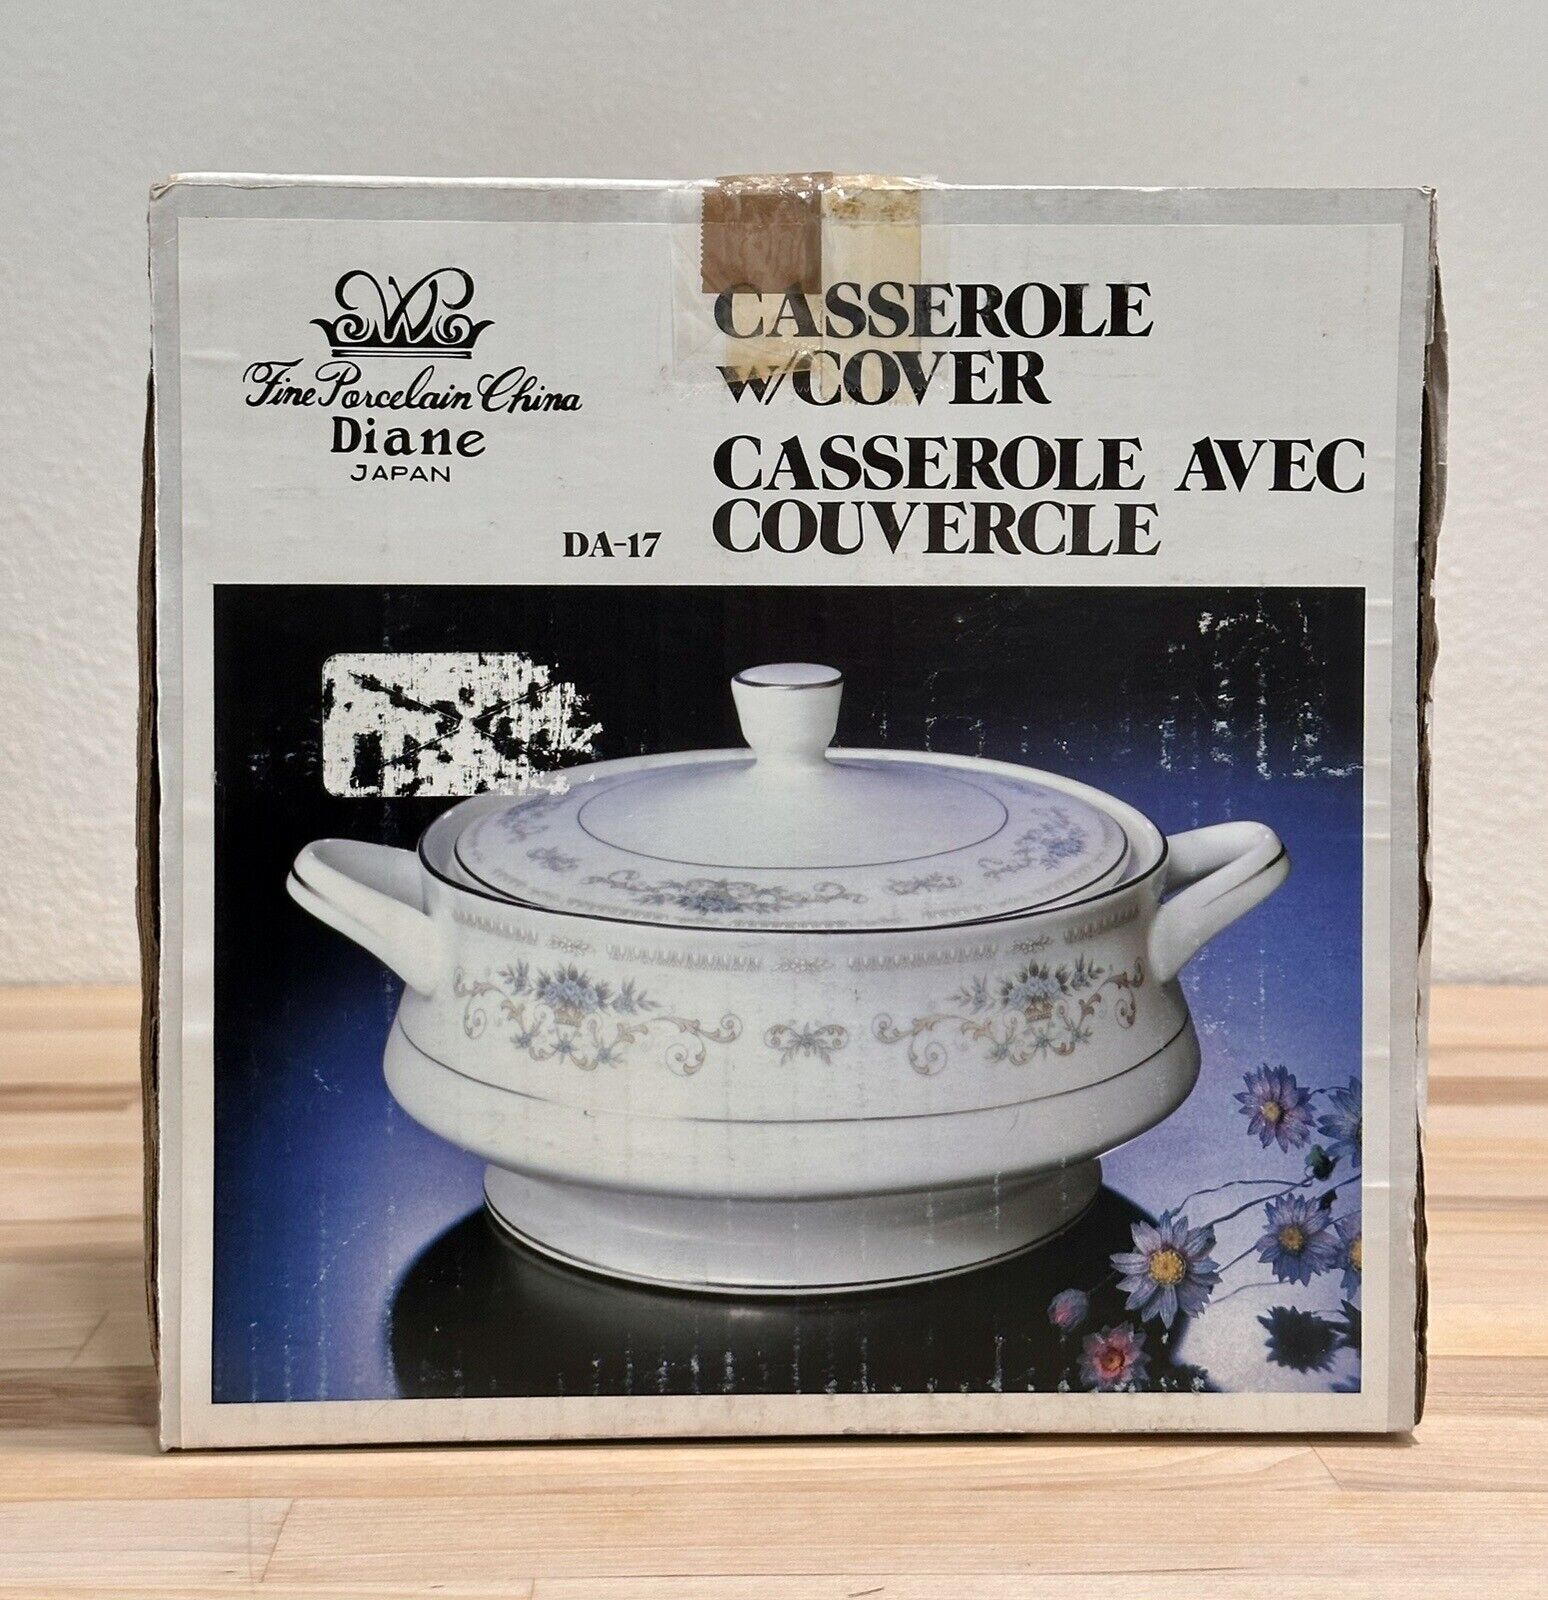 Wade Fine Porcelain China Japan DIANE Round Covered Serving Dish Bowl Casserole